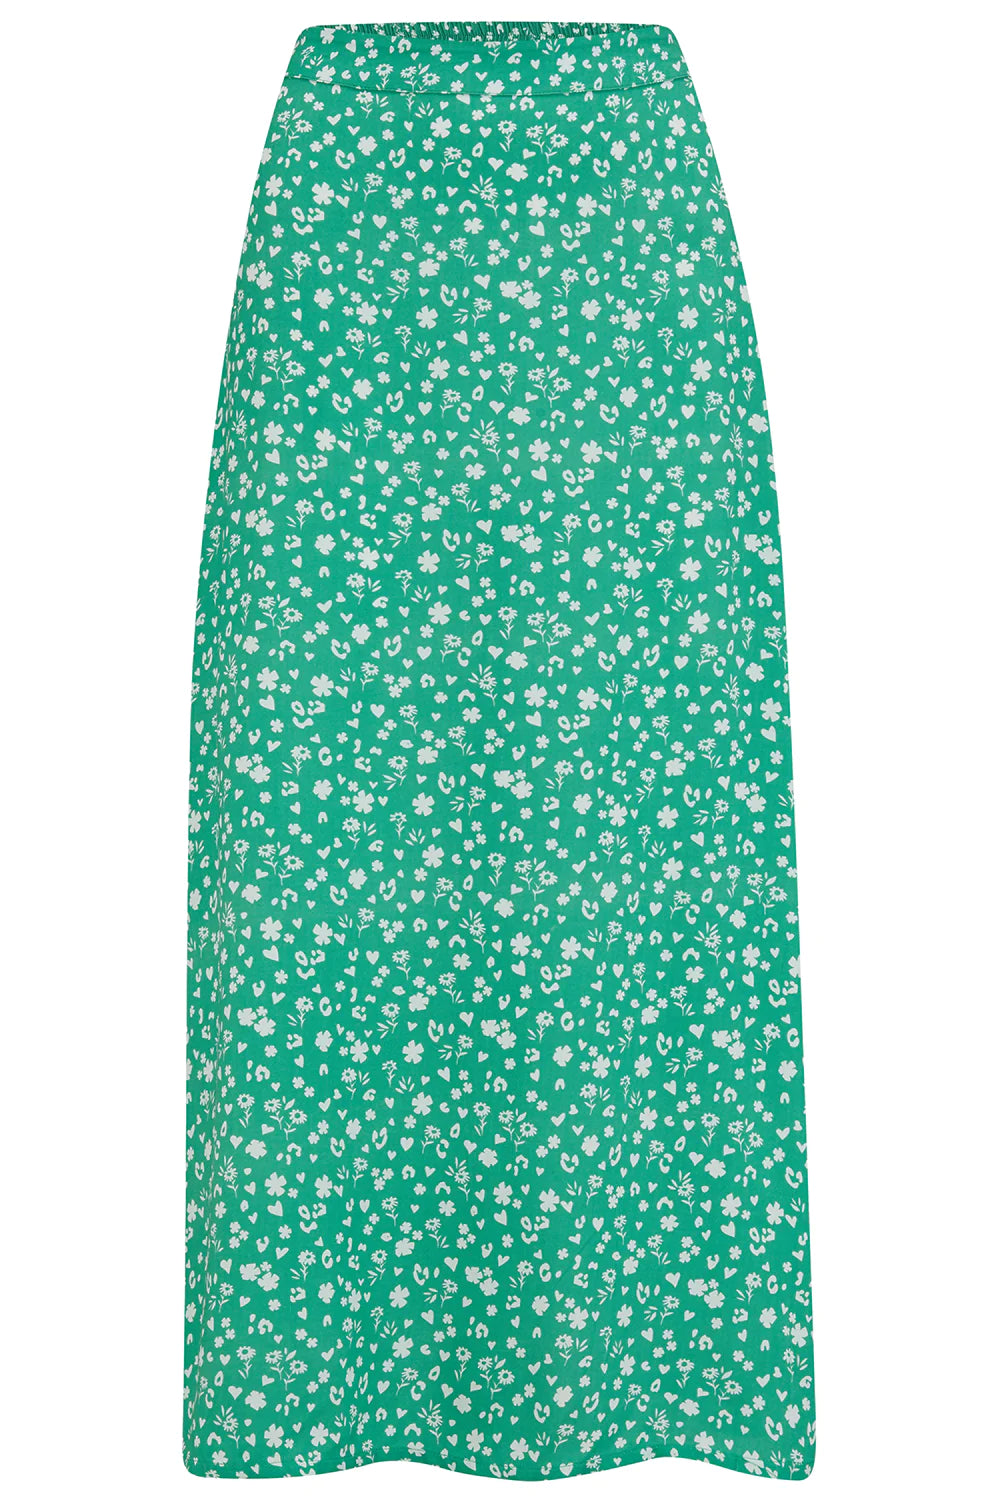 Sugarhill Brighton Zora Skirt - Green, Scatter Print